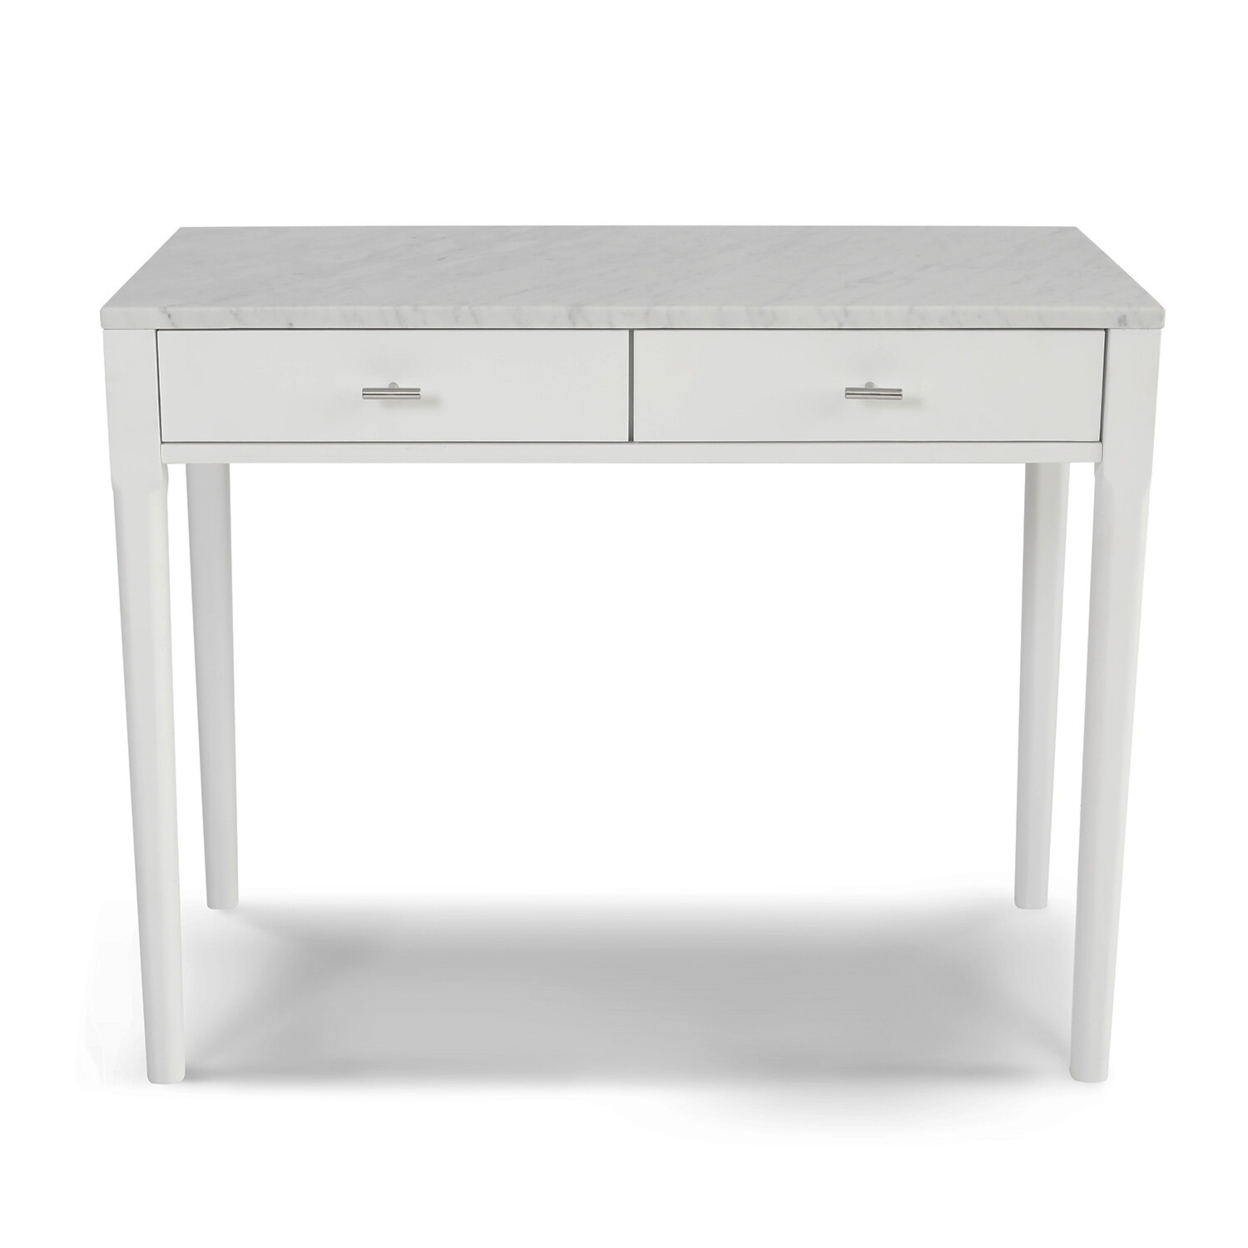 Meno 36" Rectangular Italian Carrara White Marble Console Table with Legs - white